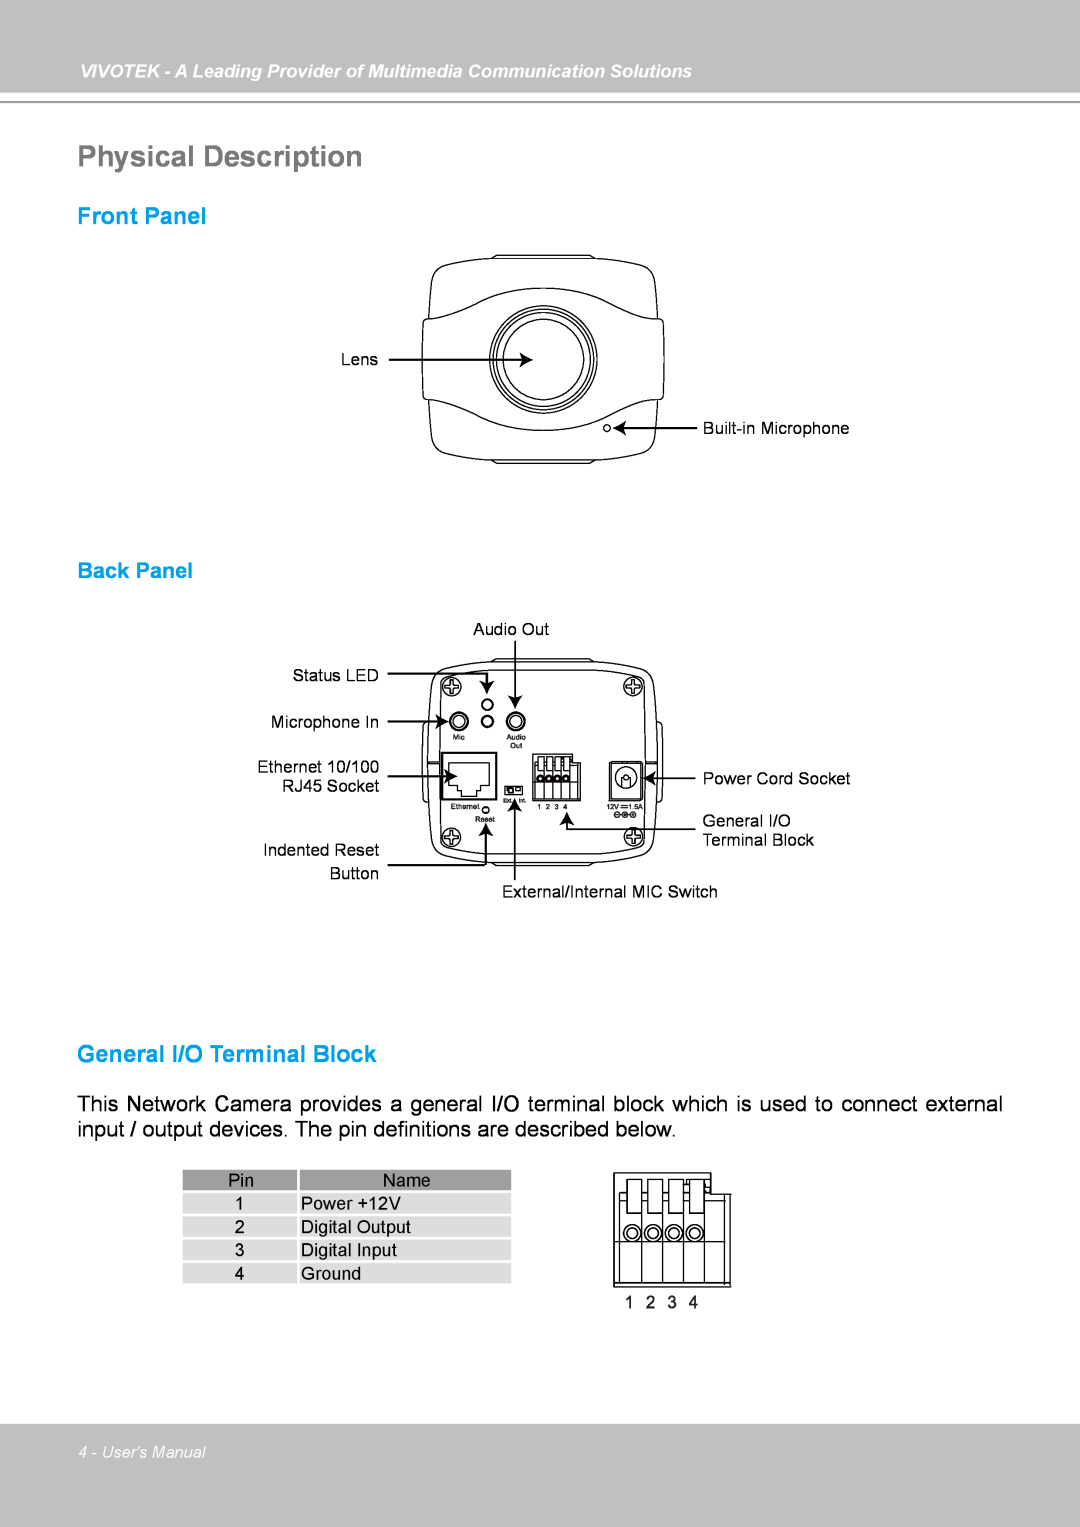 Vivotek IP7130 manual Physical Description, Back Panel, Front Panel, General I/O Terminal Block 